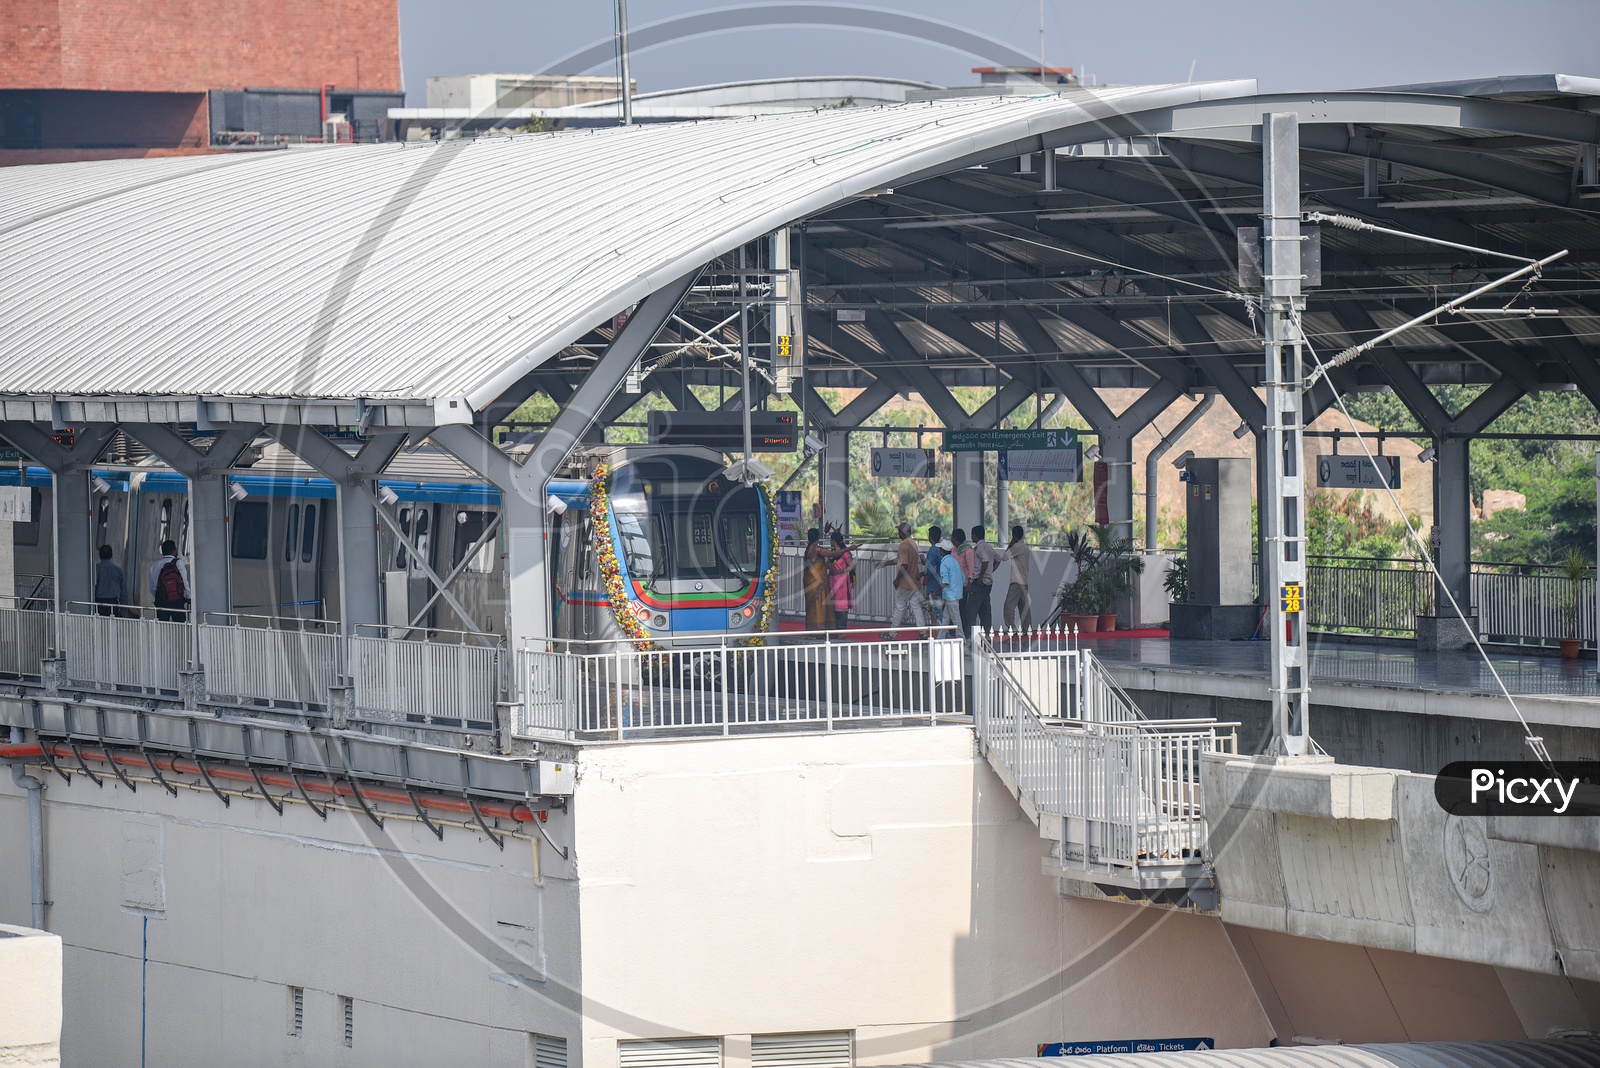 Raidurg Metro Station Opened to Public on 29th November 2019